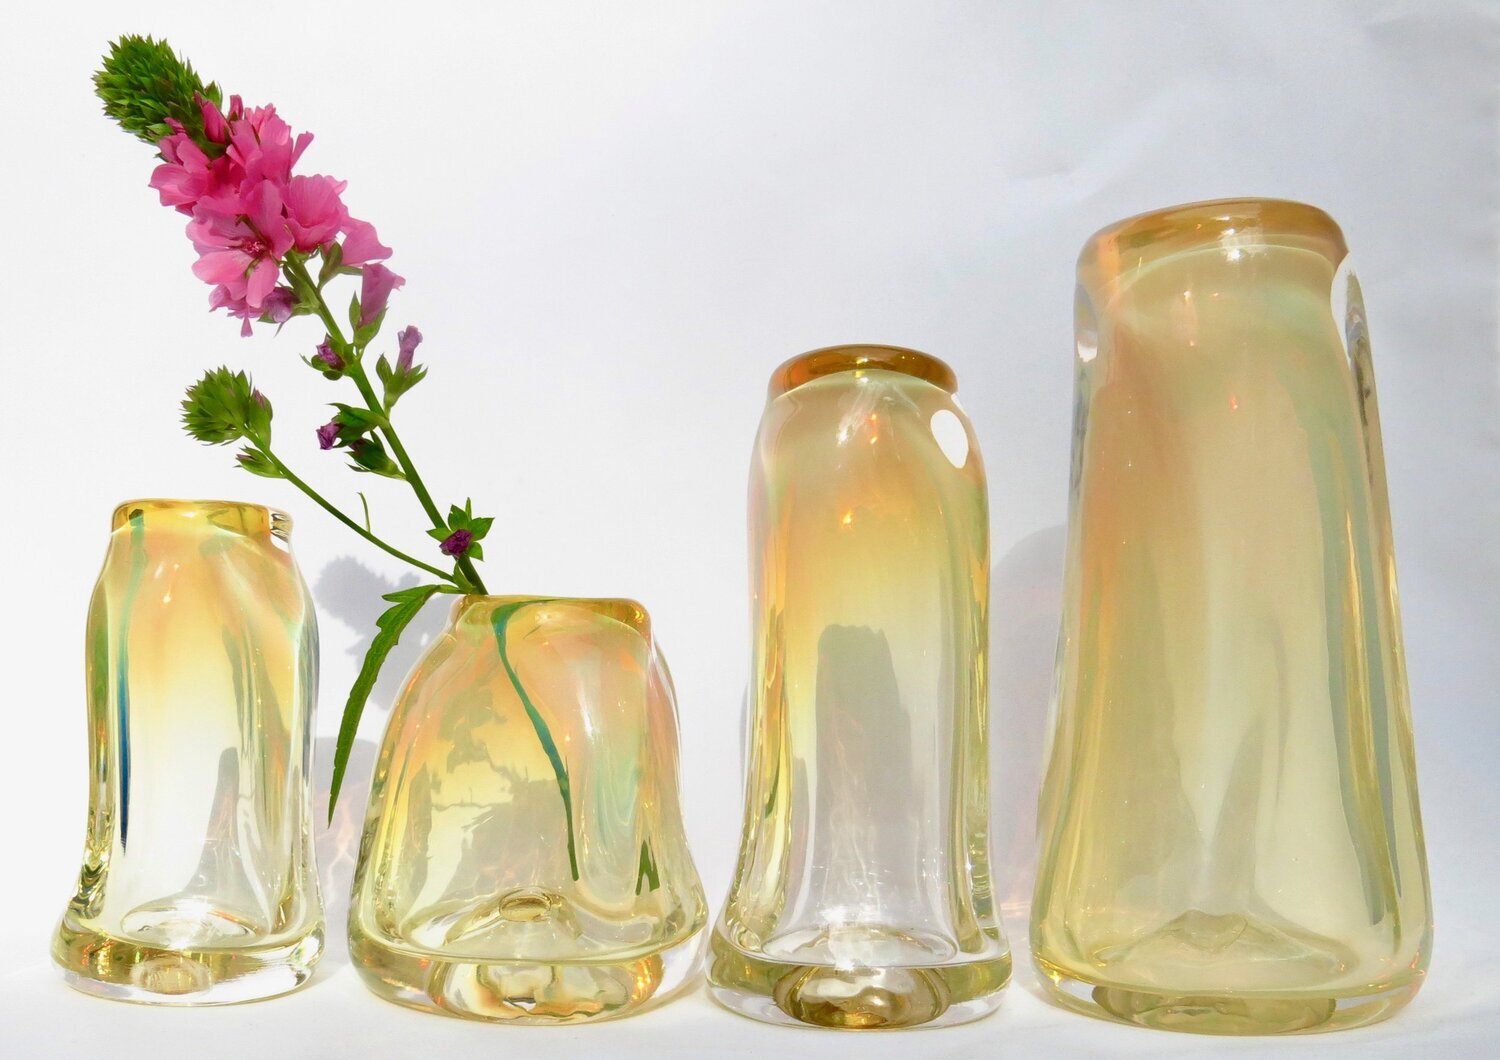 Suspension-Vases-in-Iris-Gold-Holiday-Gift-Idea.jpg